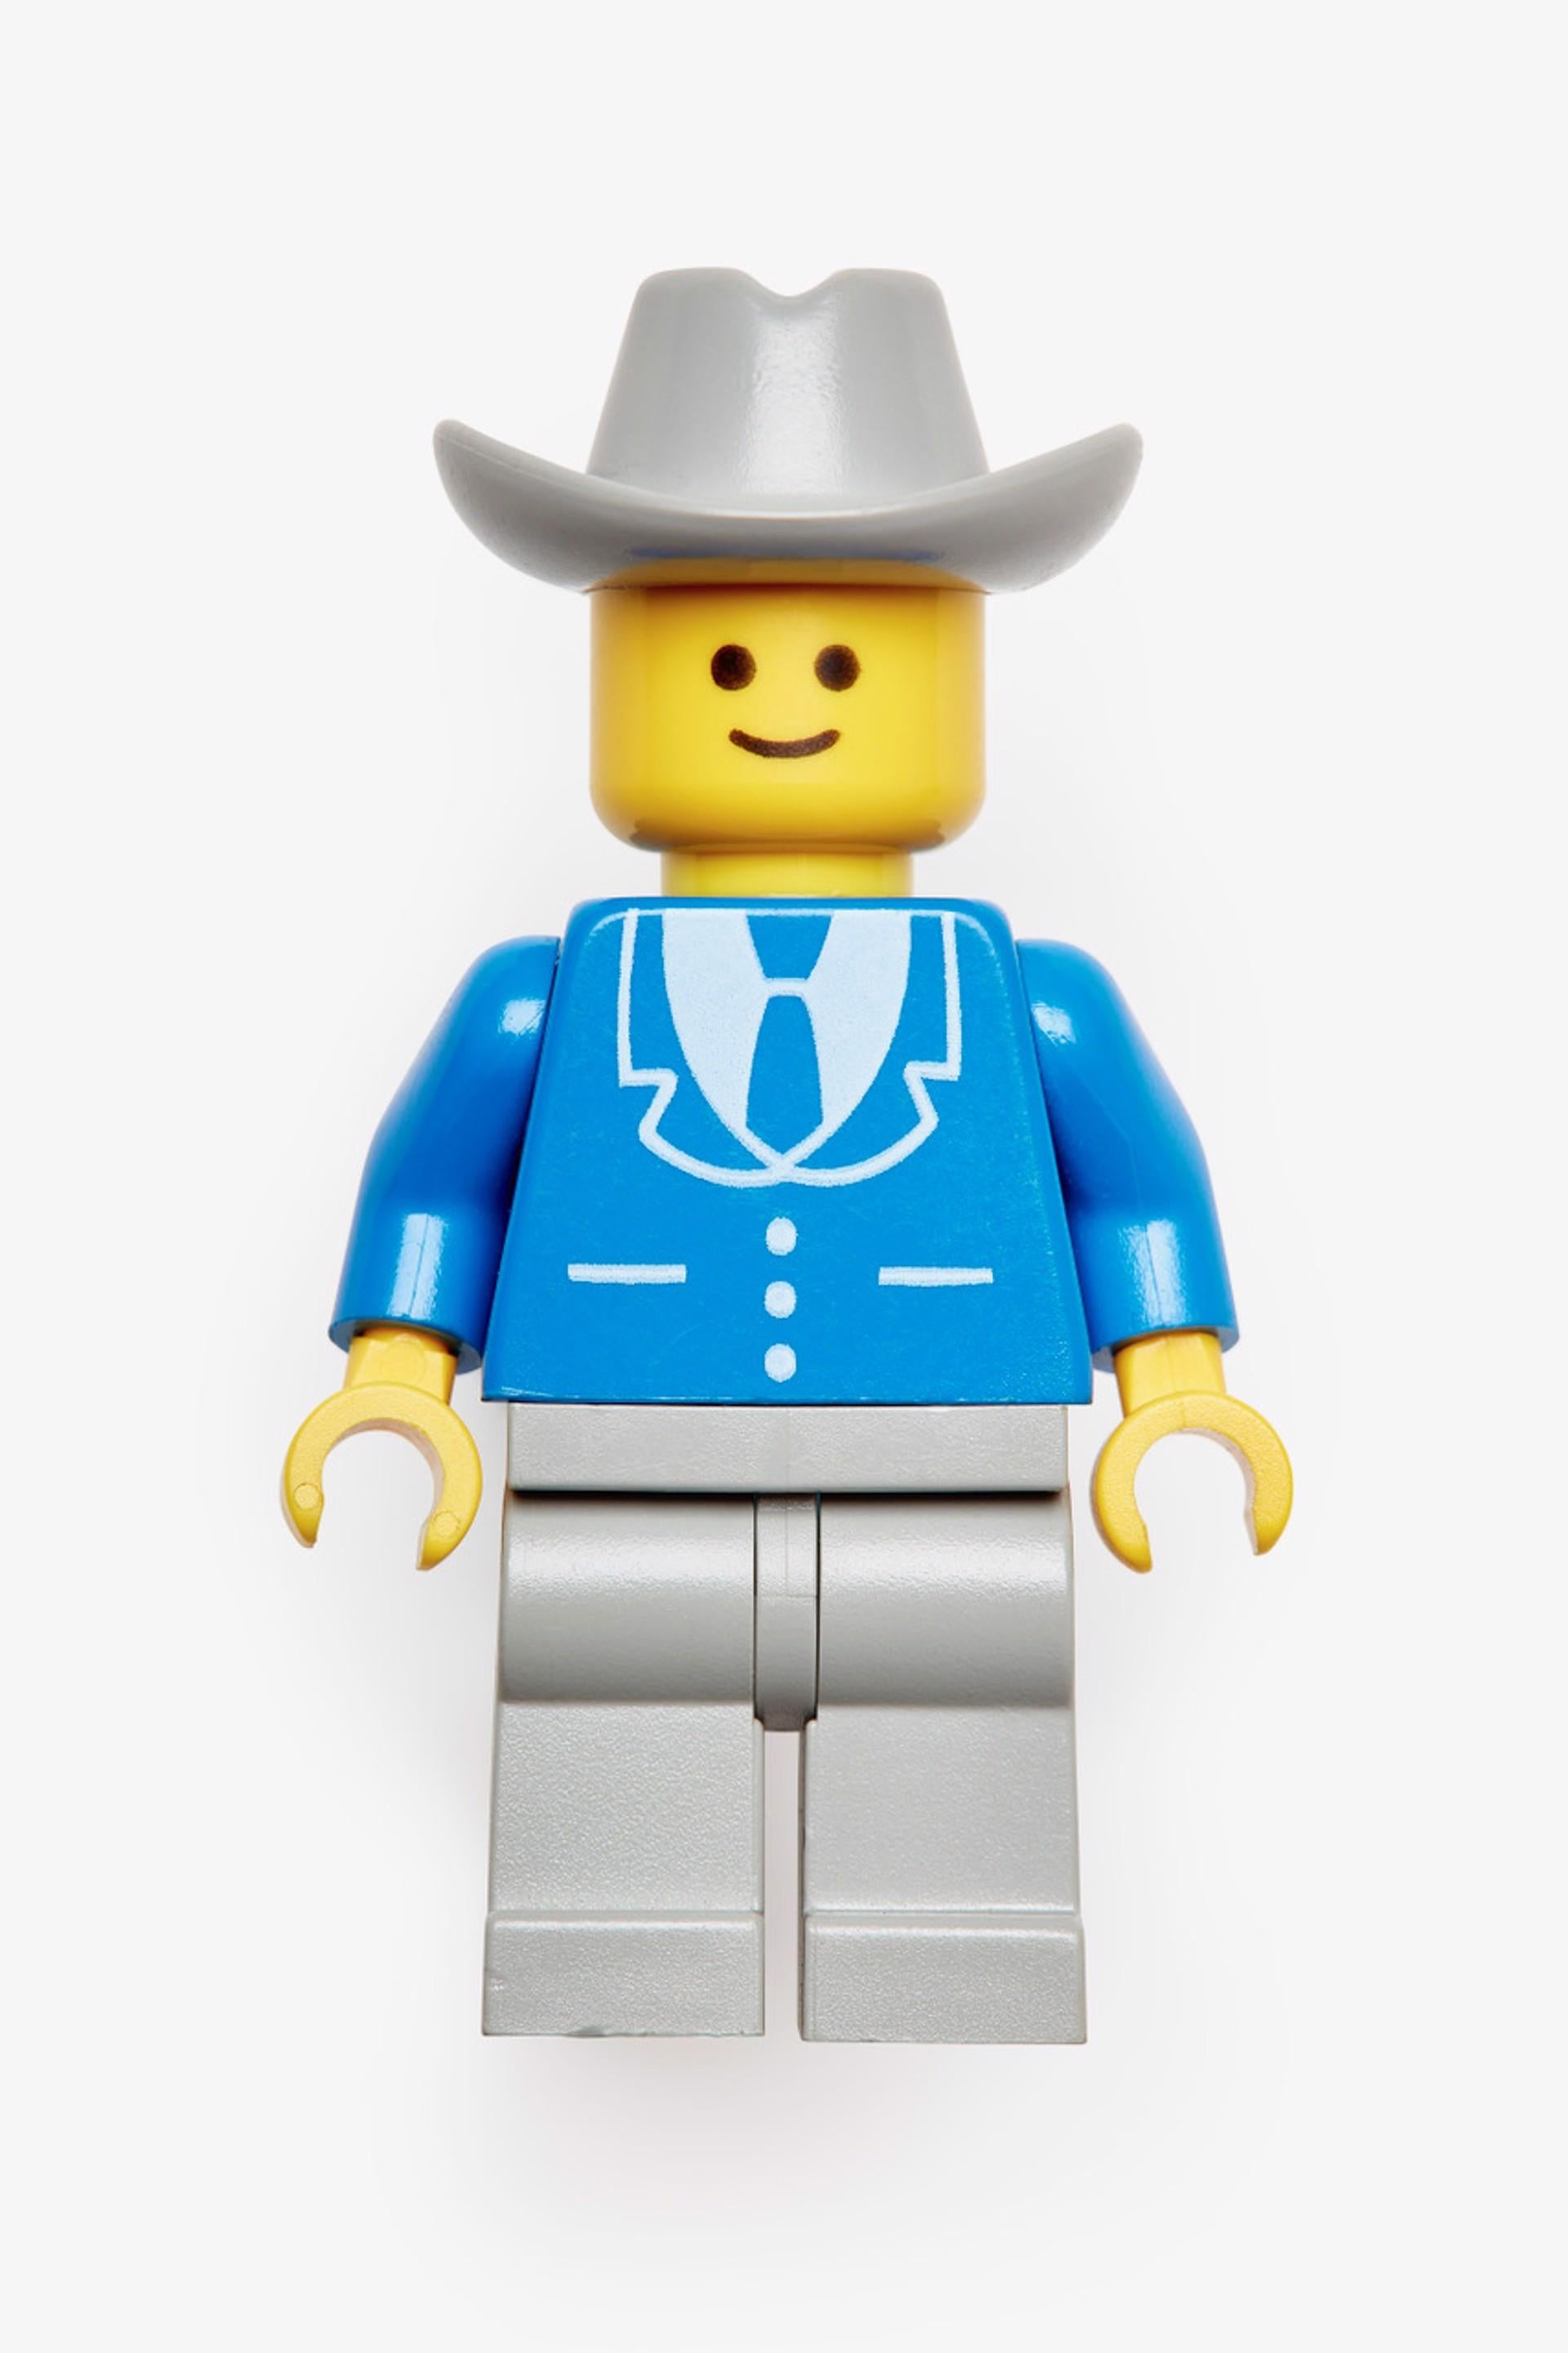 Peter Andrew Lusztyk Color Photograph - Lego "Cowboy" (36" x 24")